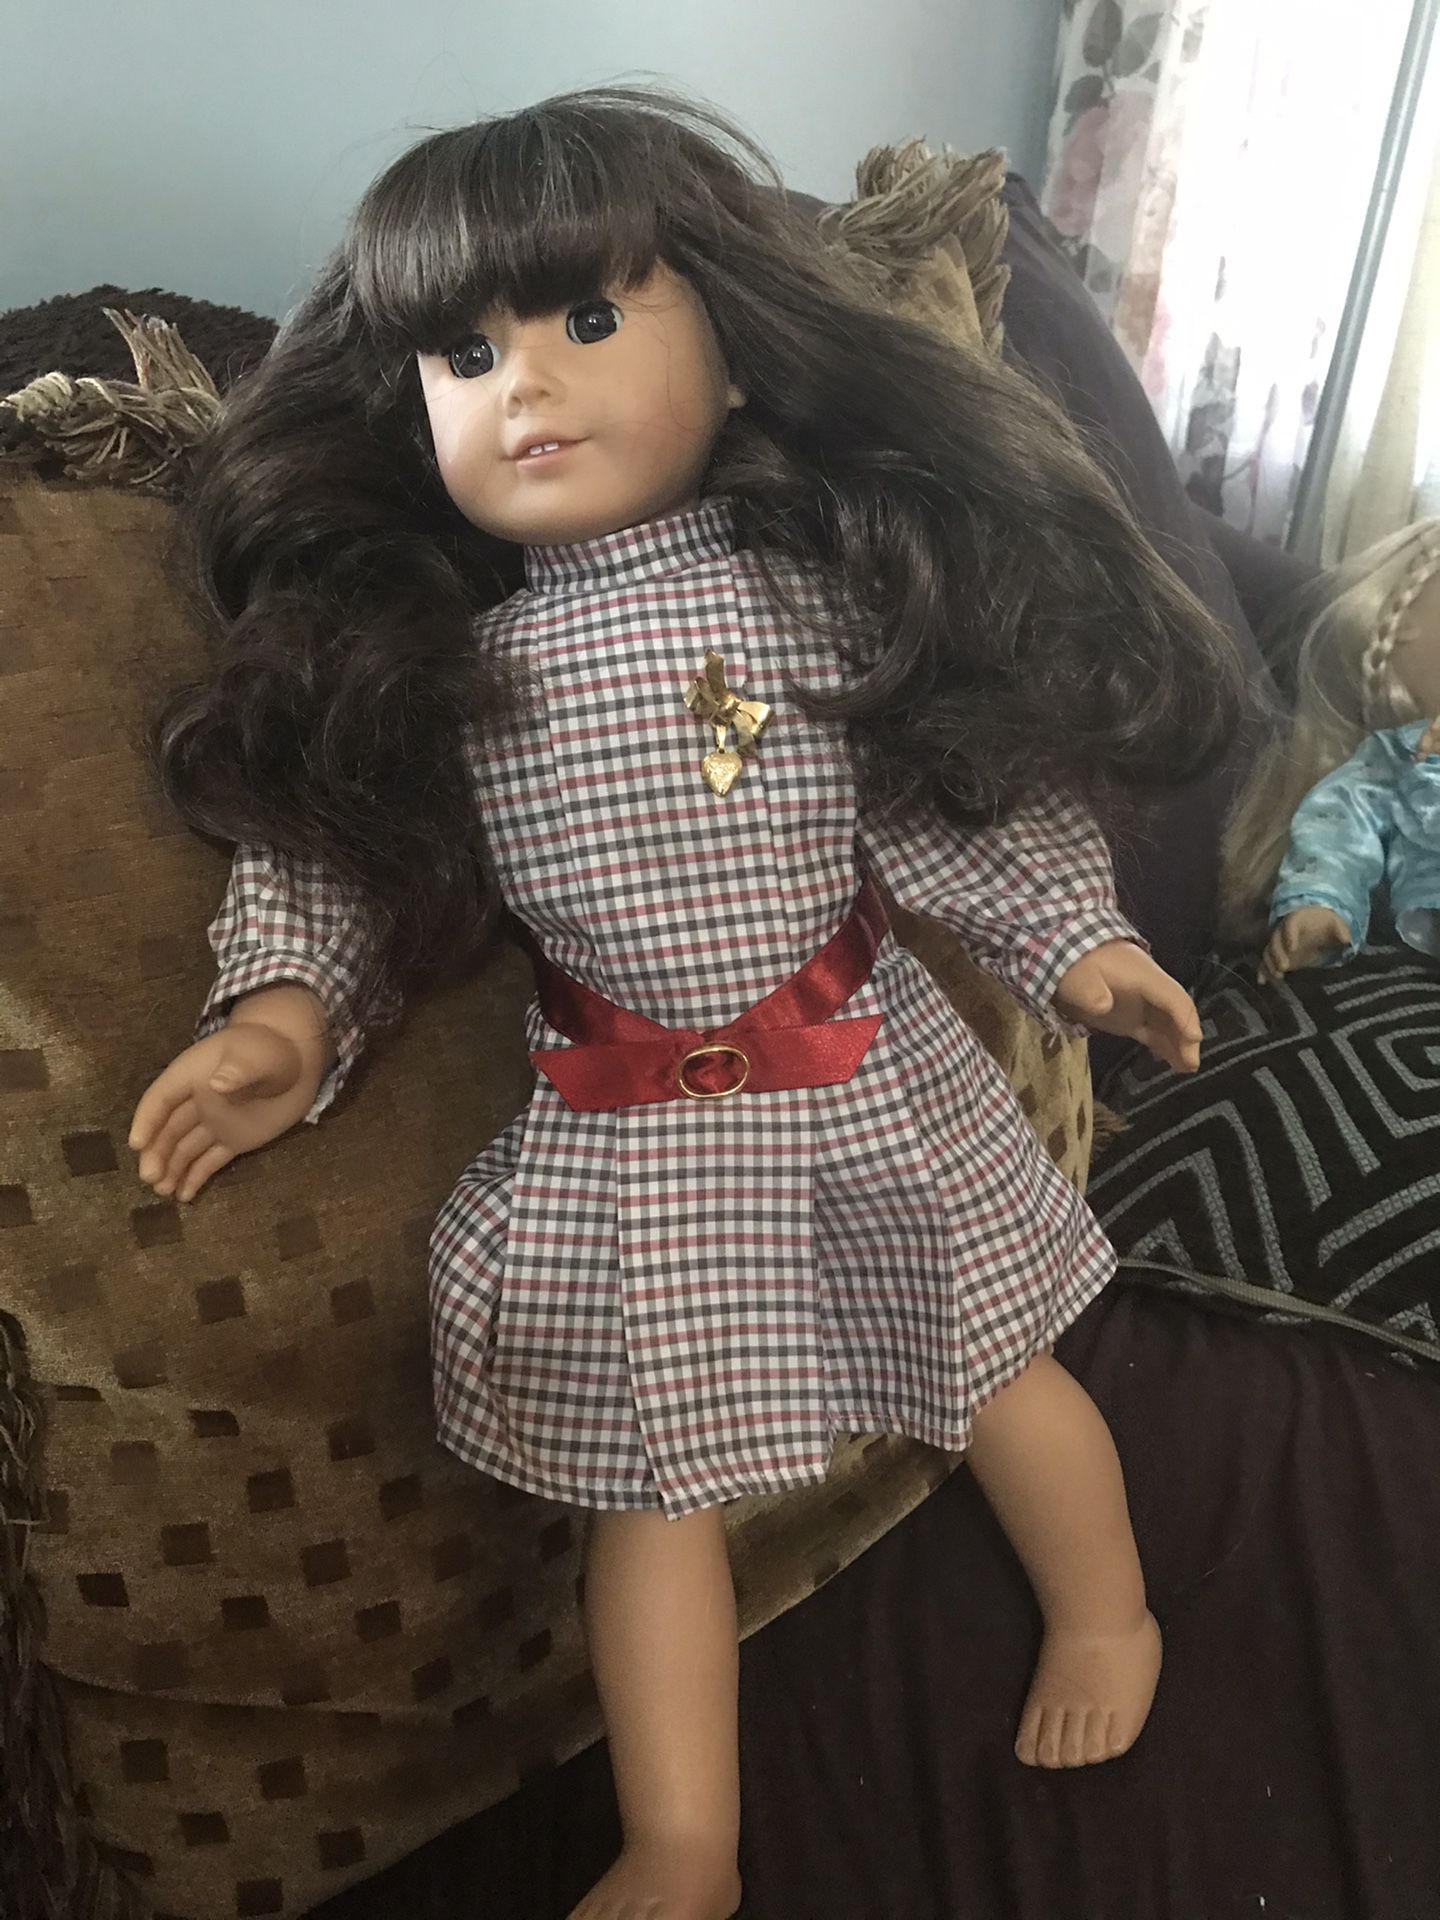 Samantha American girl doll.